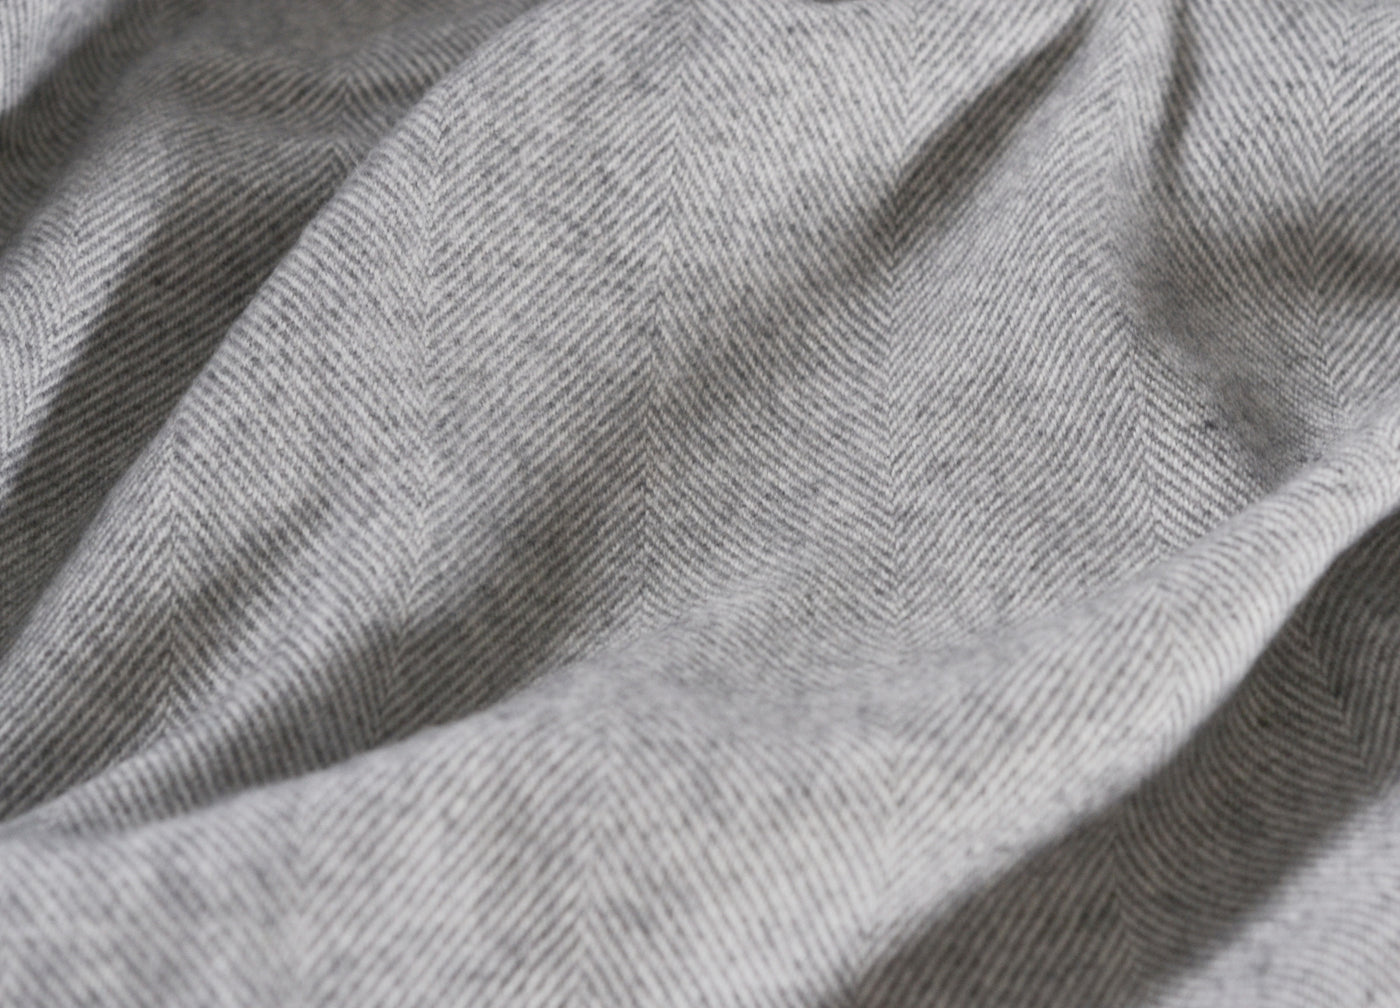 Closeup of XL grey merino herringbone wool blanket